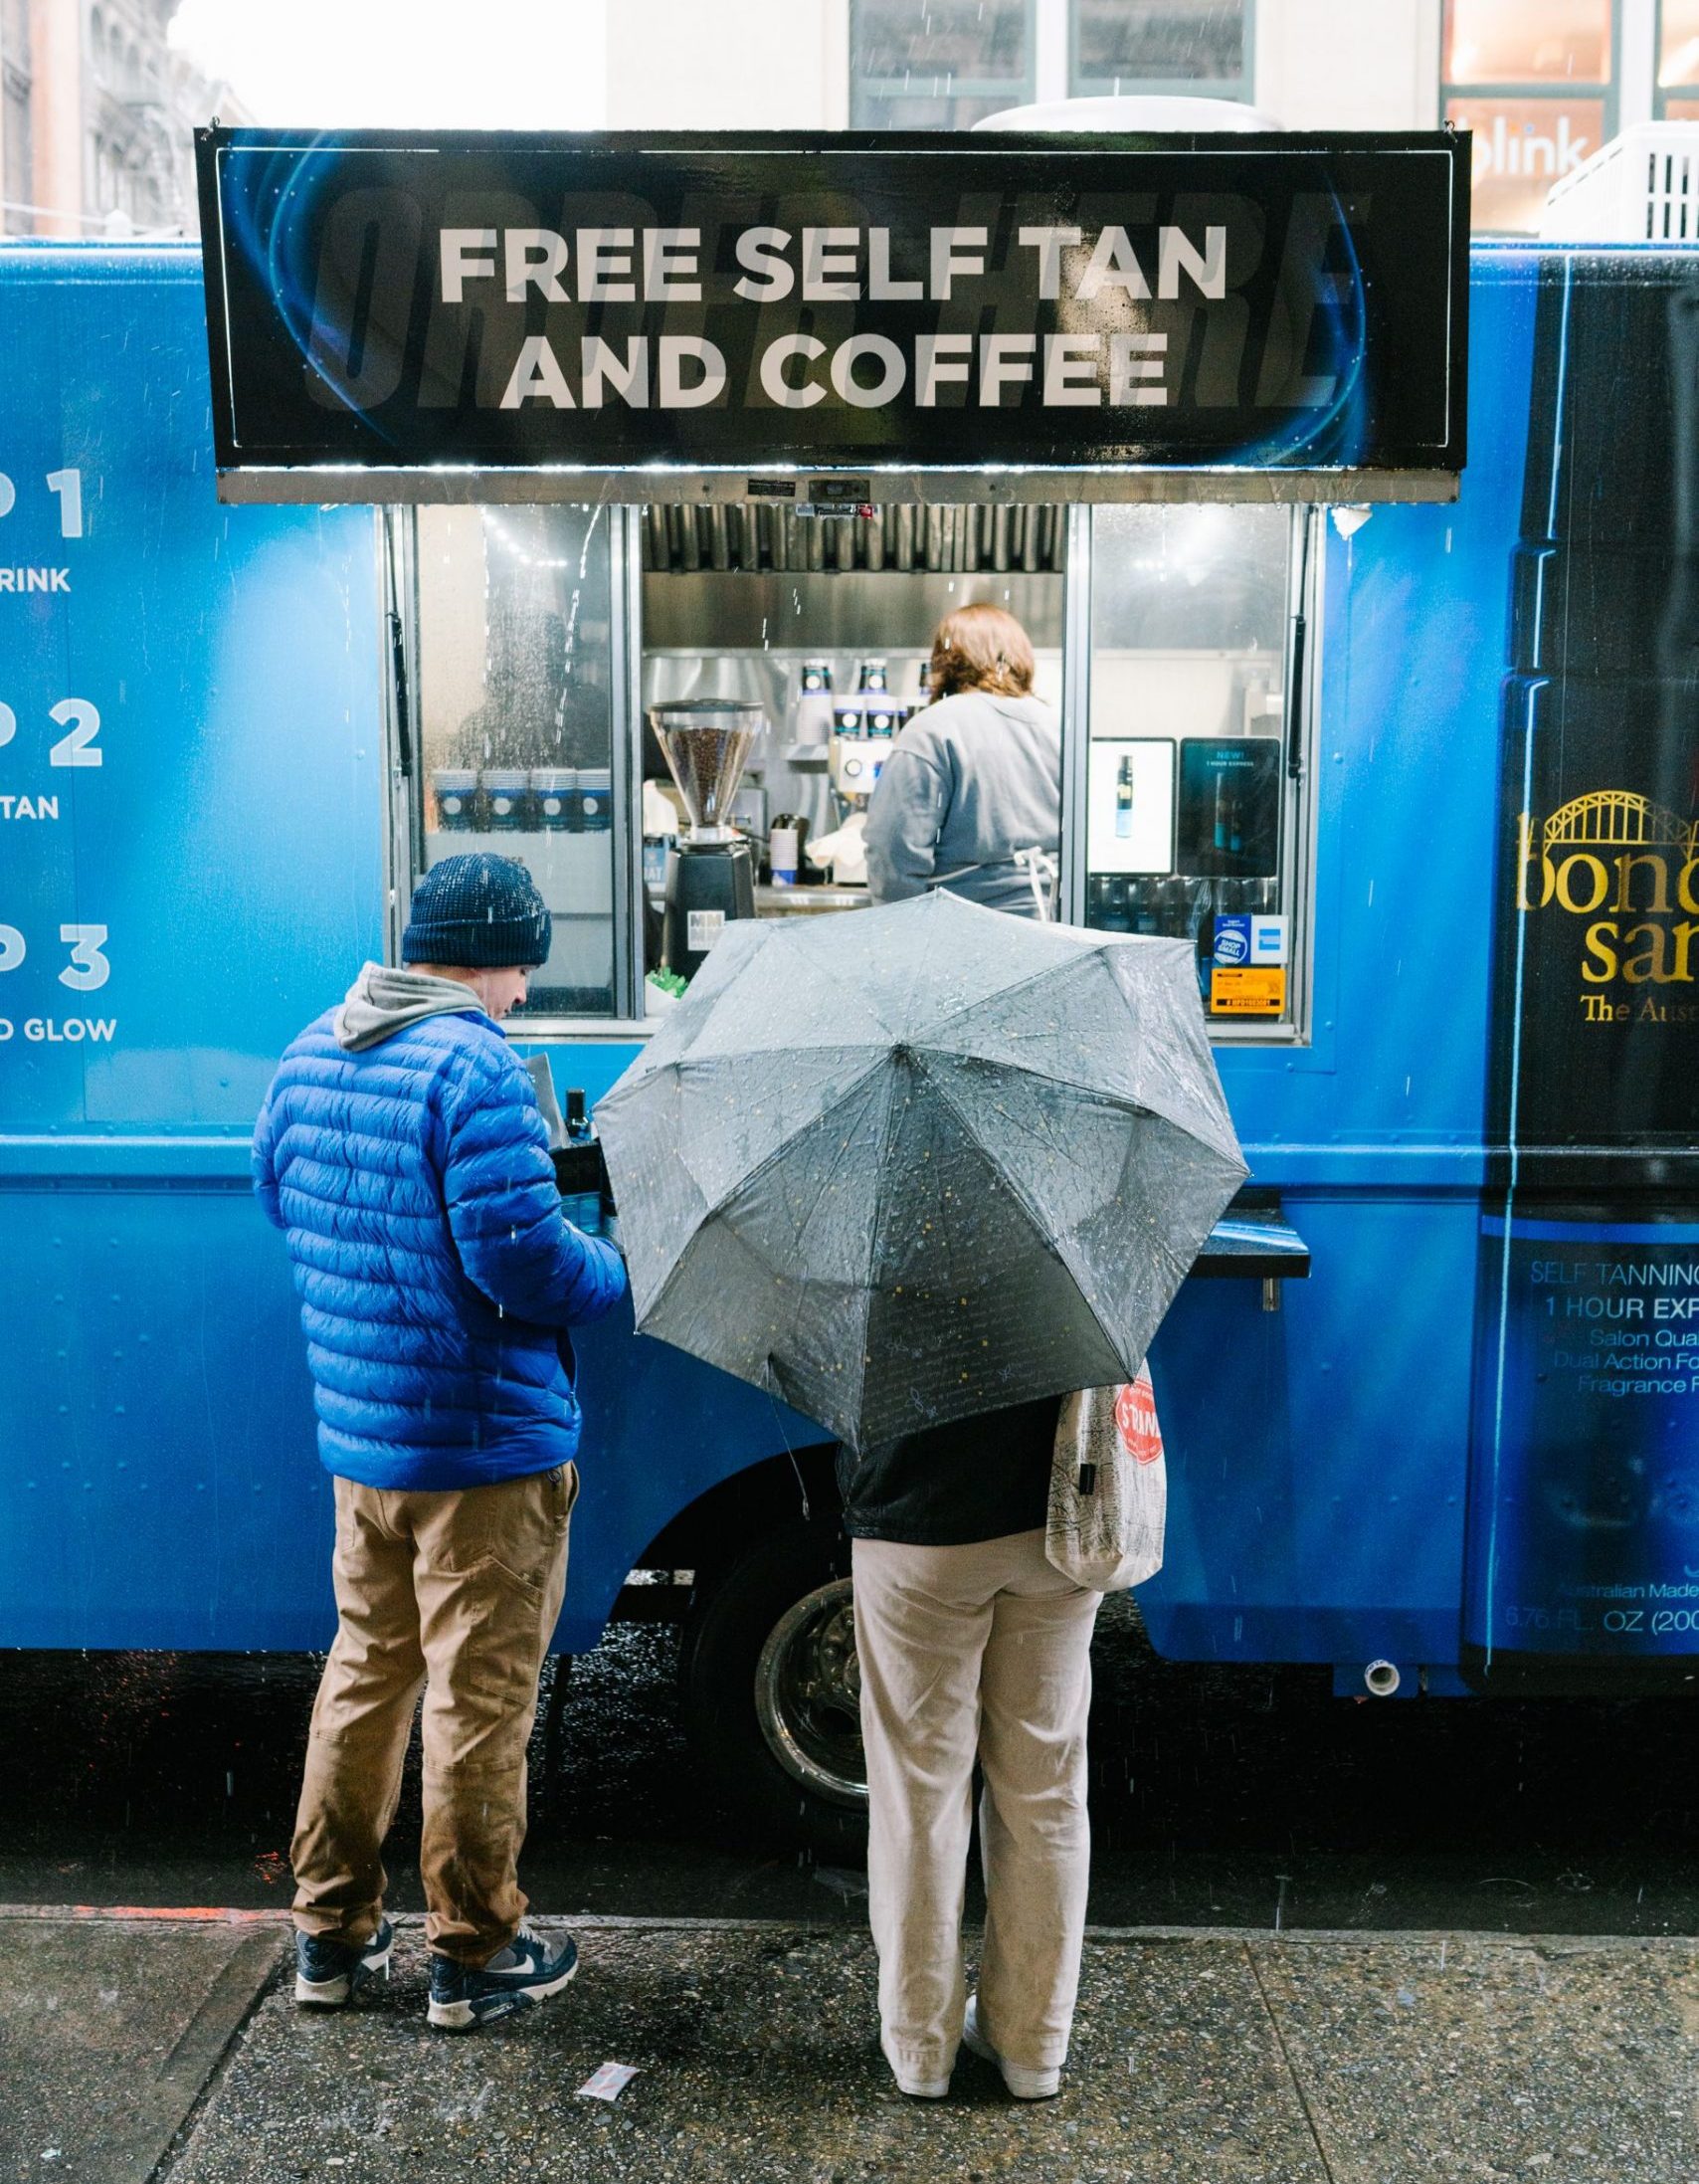 Bondi Sands Tan Van On Rainy Day In NYC